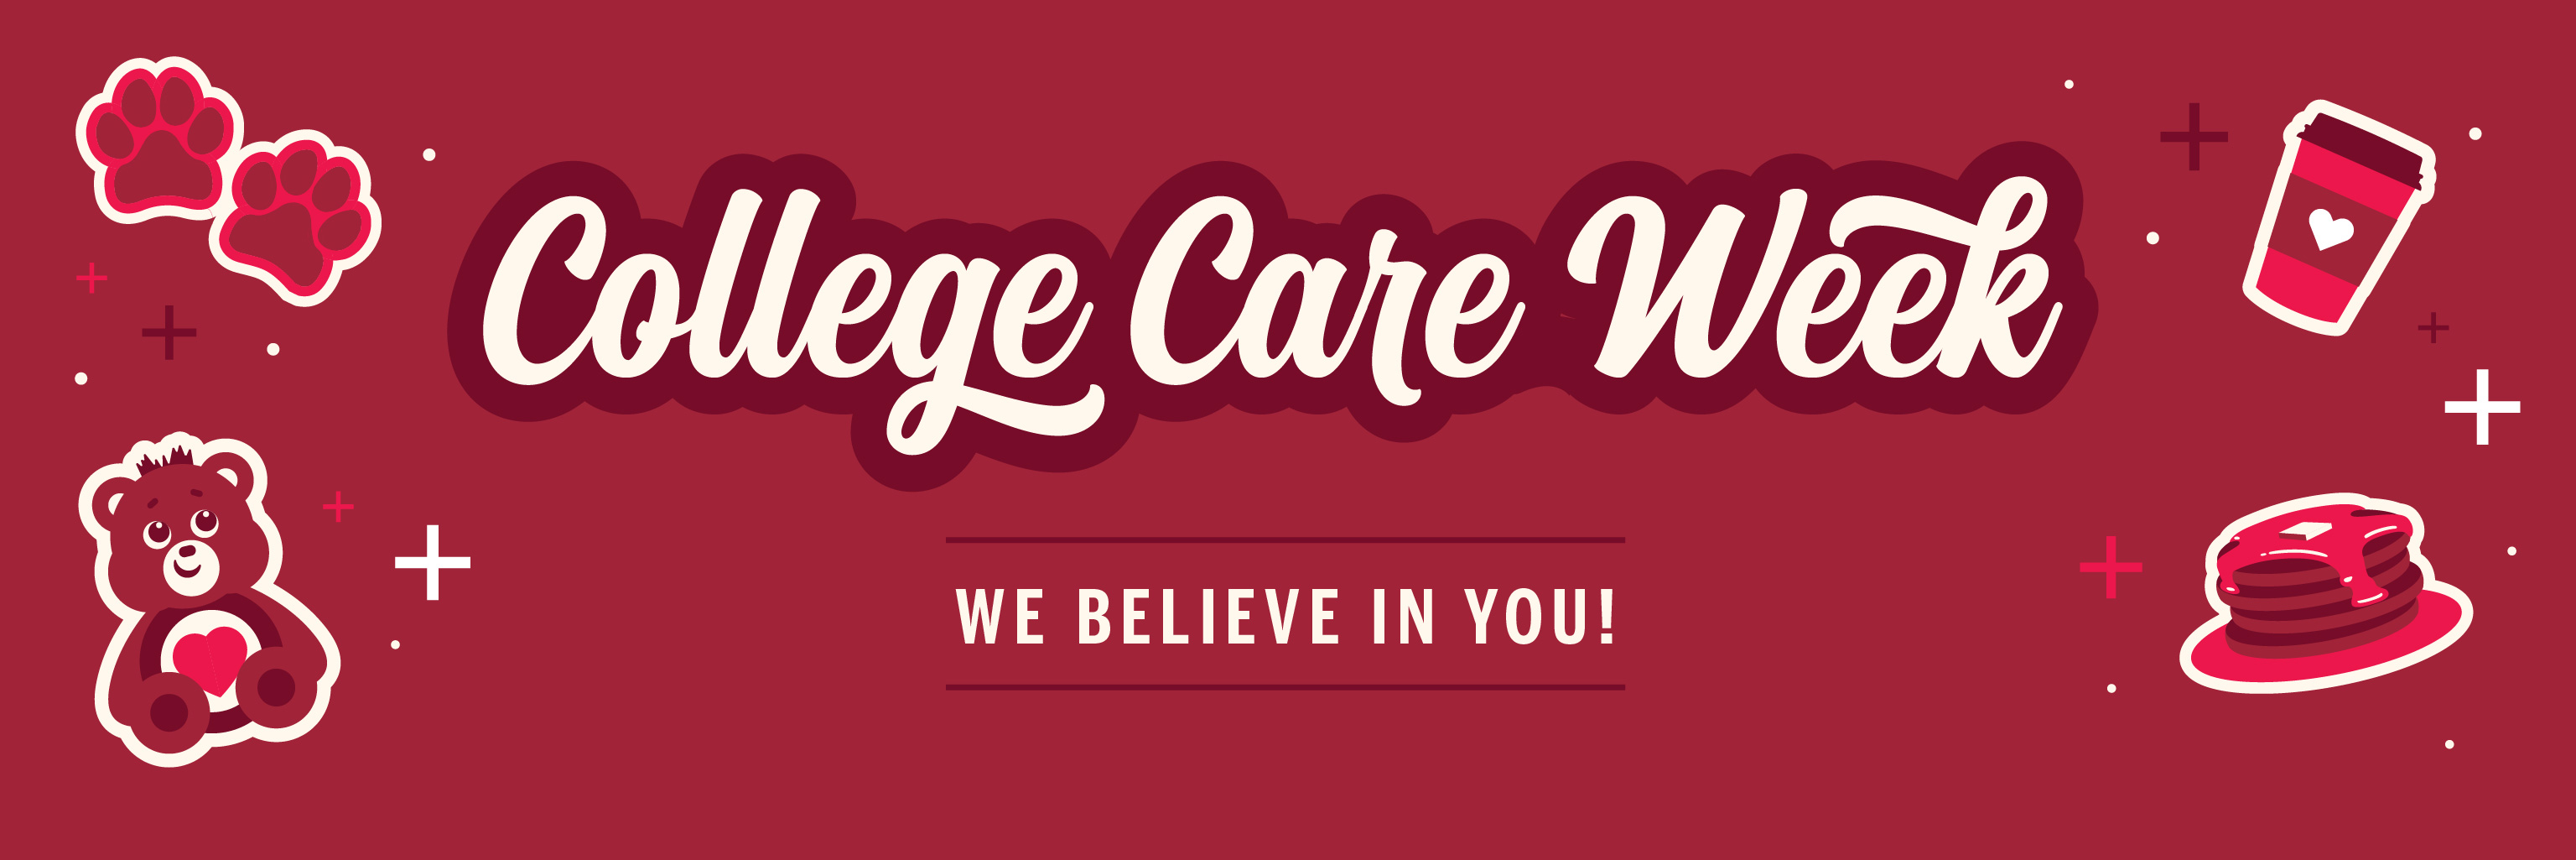 College Care Week. We believe in you!